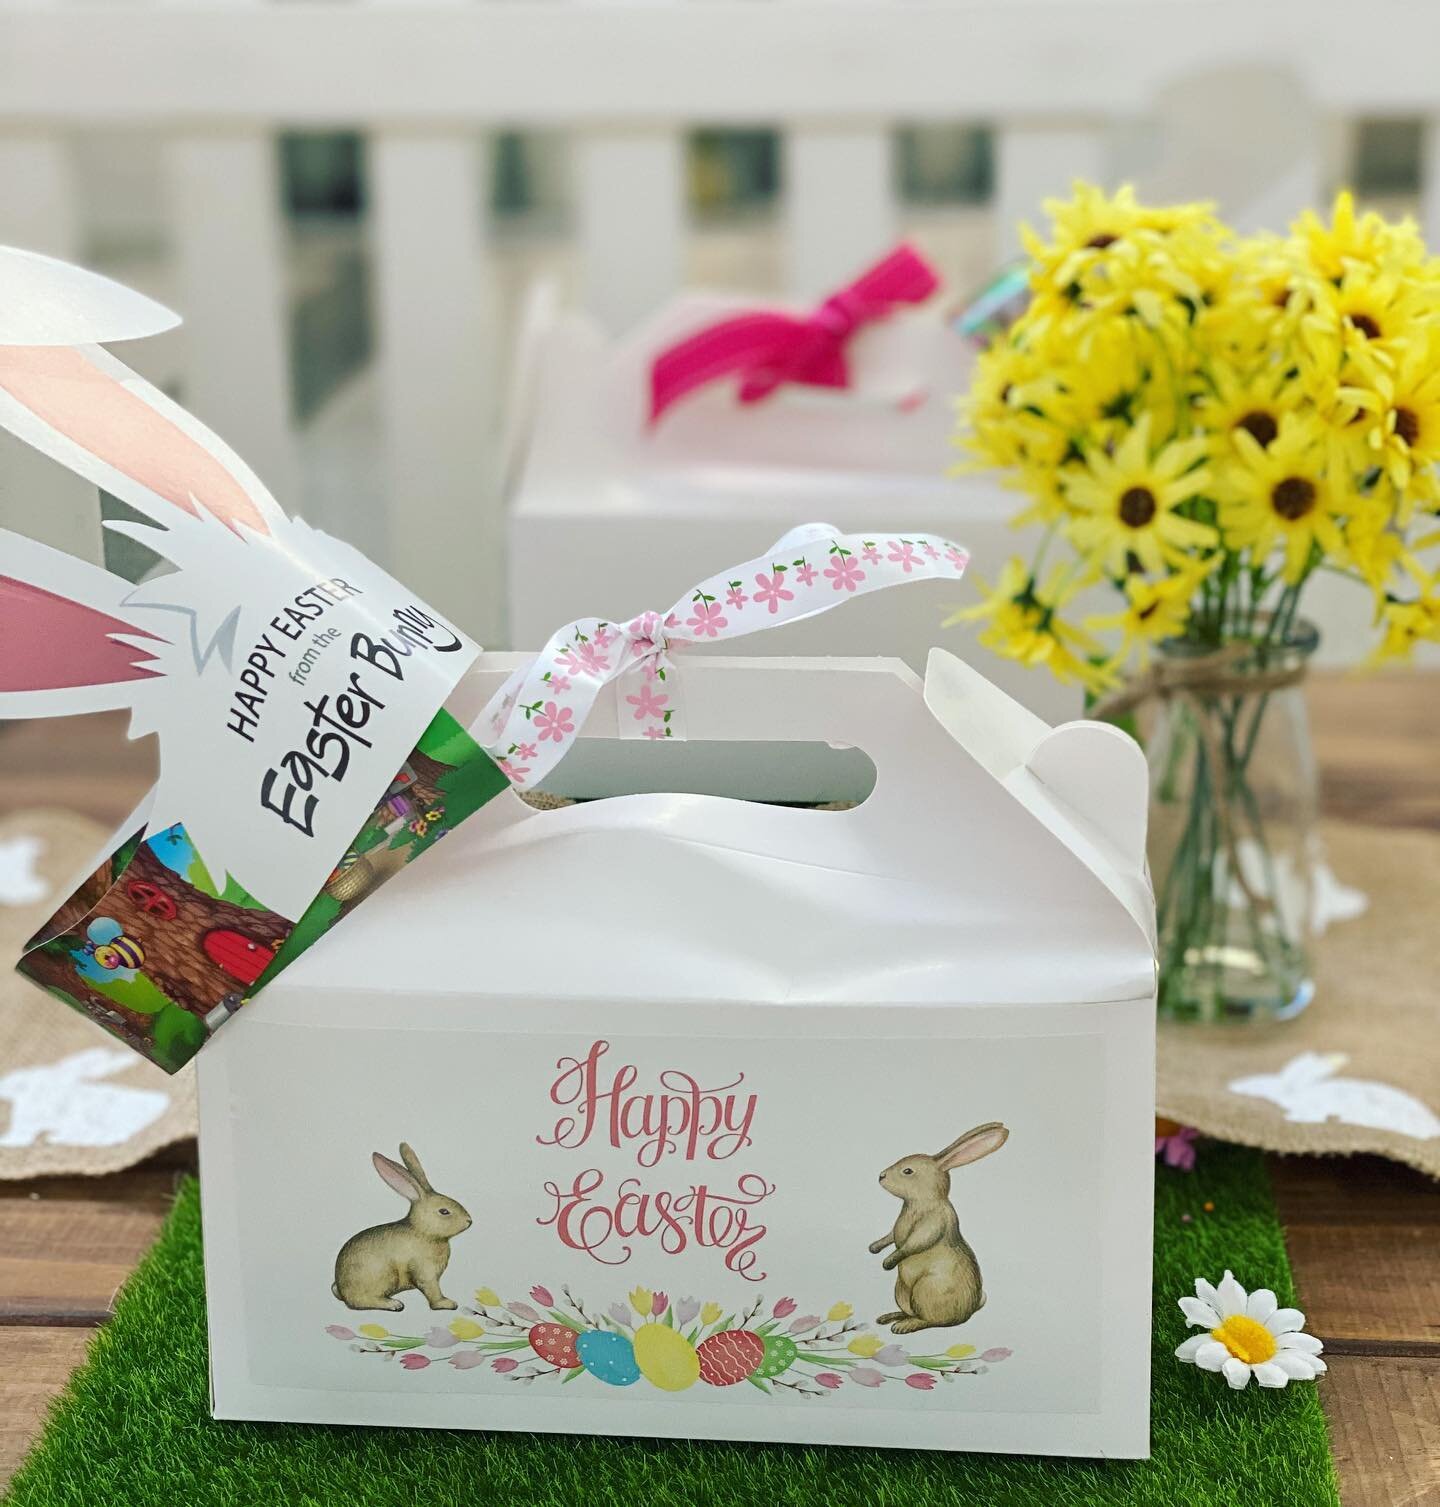 Easter is just a few sleeps away! Hop hop to it 🐥🐥#easterbreakfast #easter #bunnies #alice #madhatter #whiterabbit @stocklandmerrylands